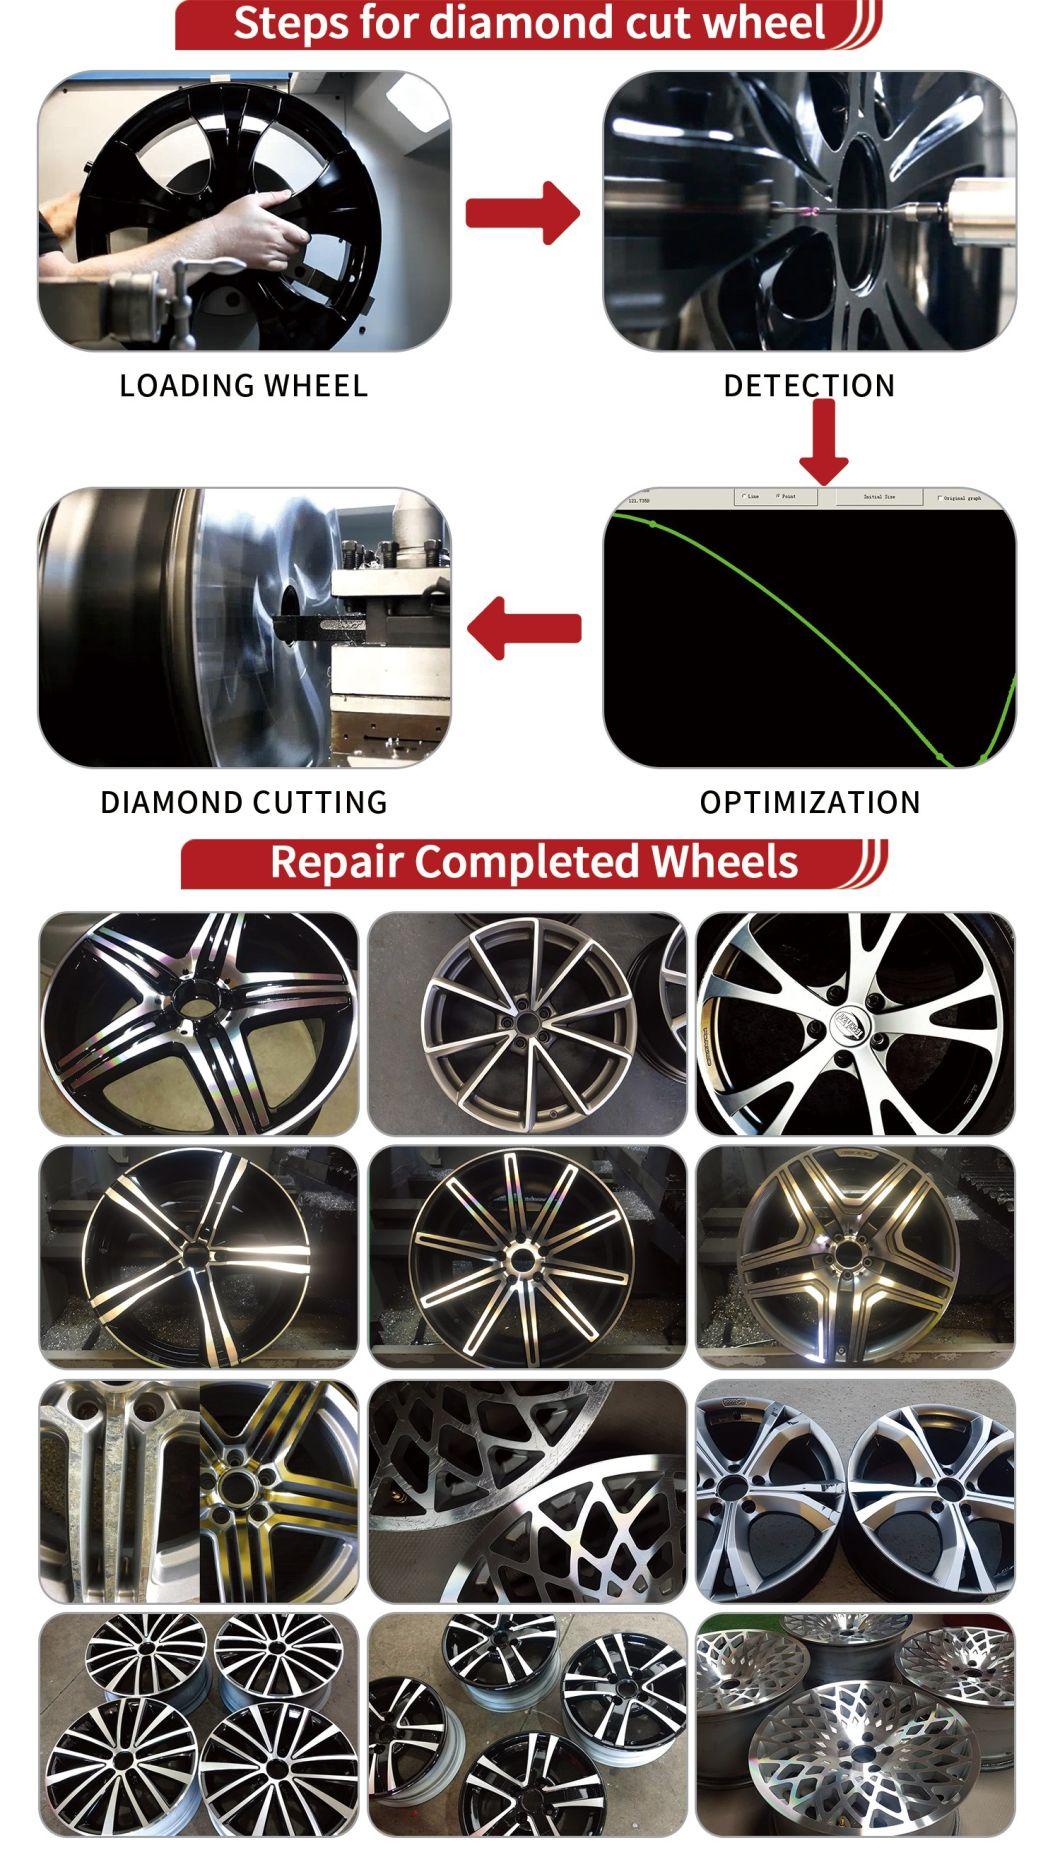 Wheel Refinish CNC Lathe 7.5 Kw Diamond Cut Wheel Machines Awr28h